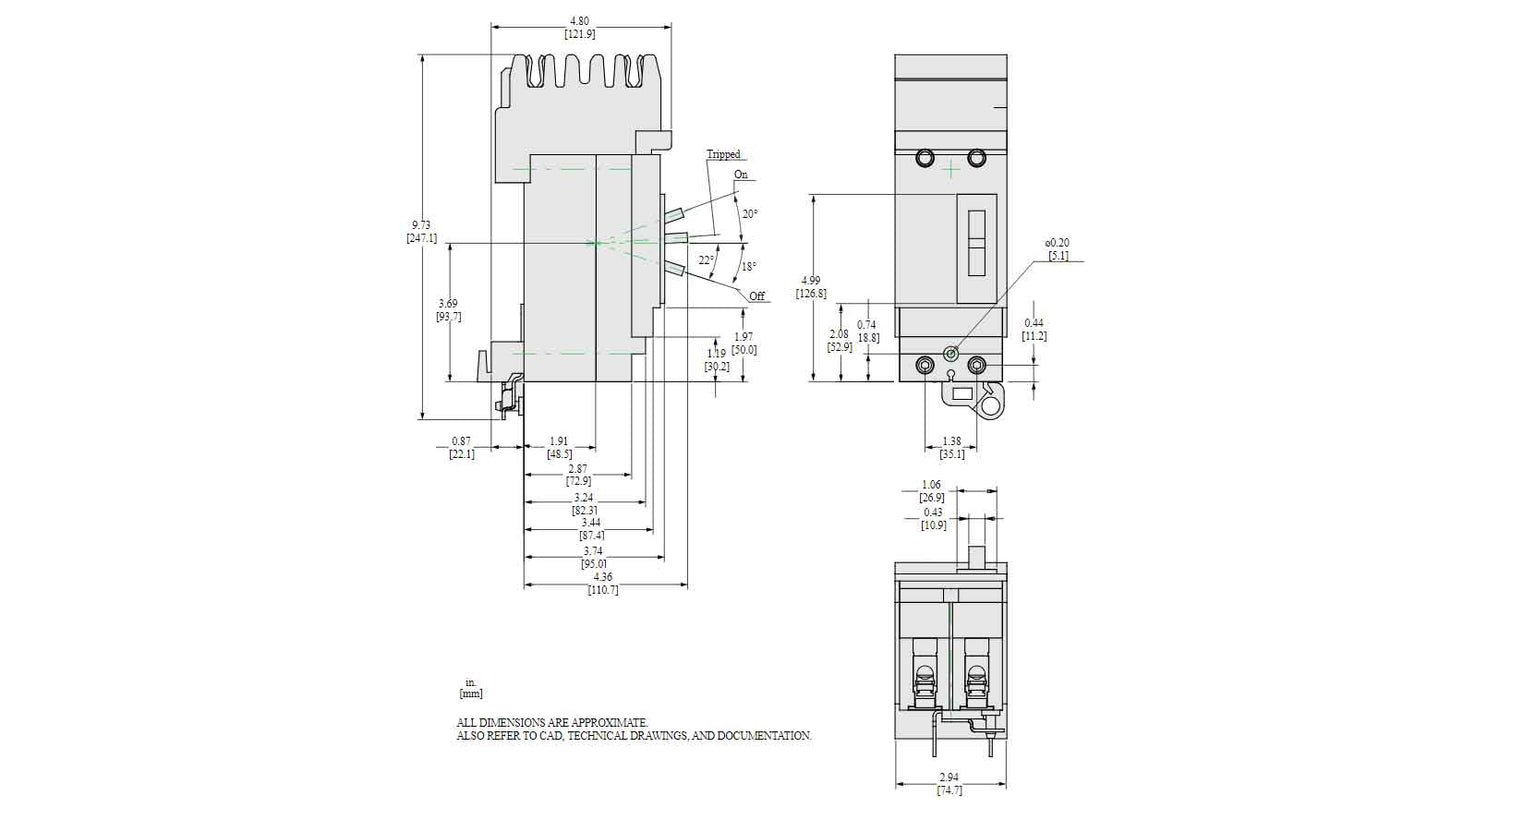 HDA260351 - Square D - Molded Case Circuit Breakers